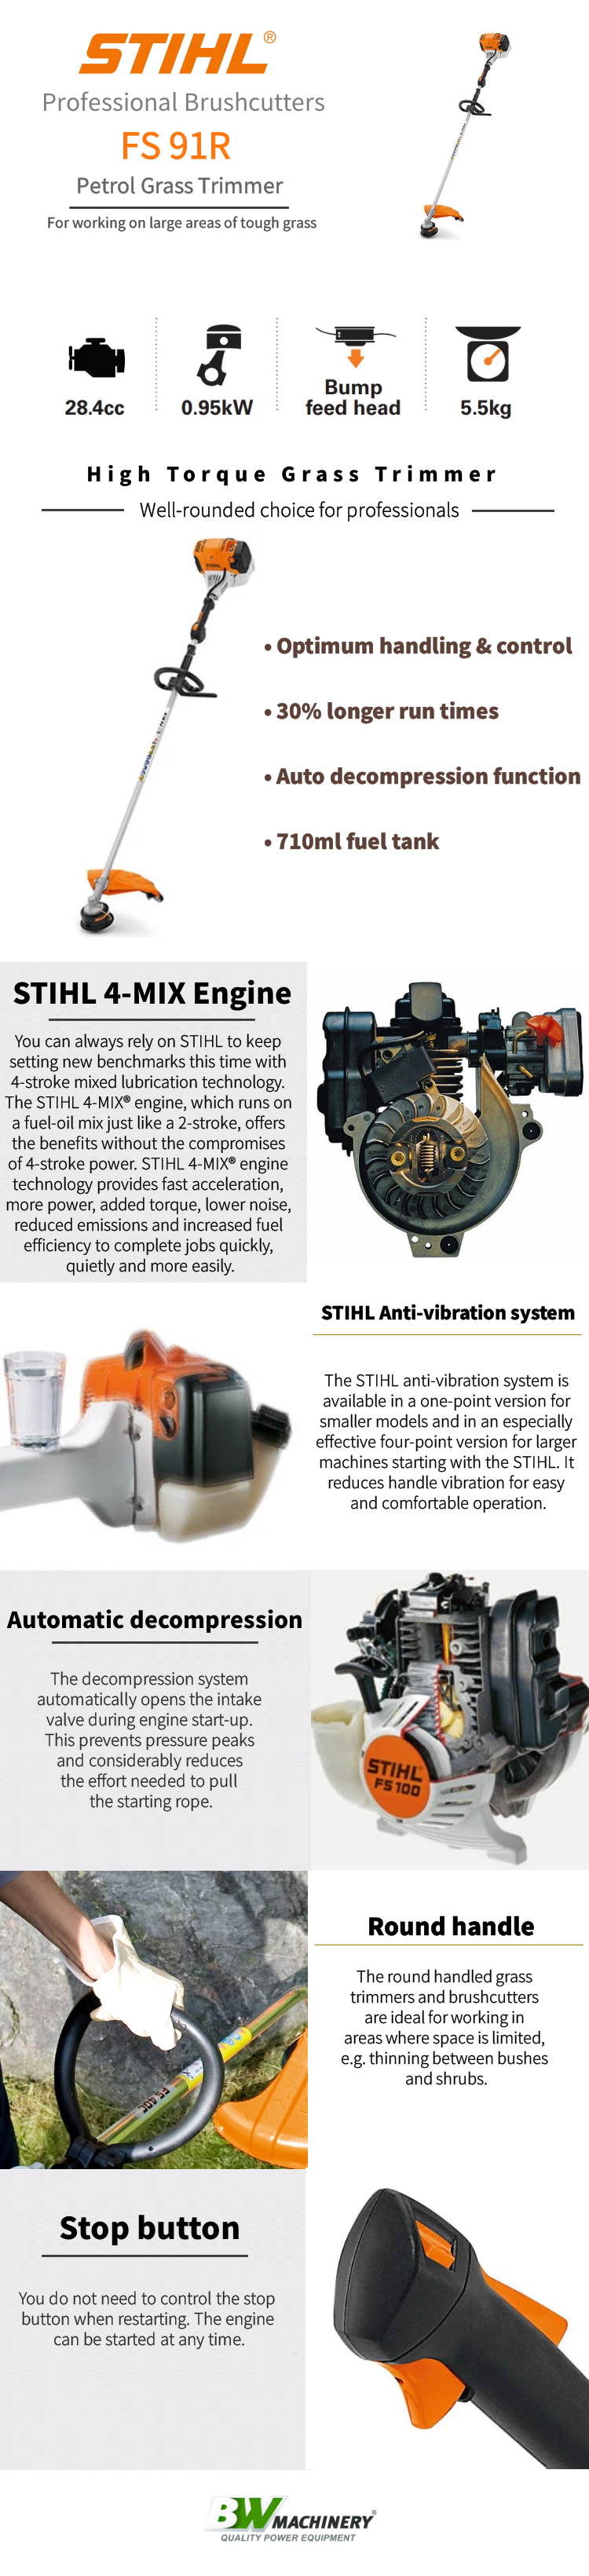 Stihl Fs 91R Review | Stihl Fs 91 R Gas Trimmer Reviews | Fs91R Review